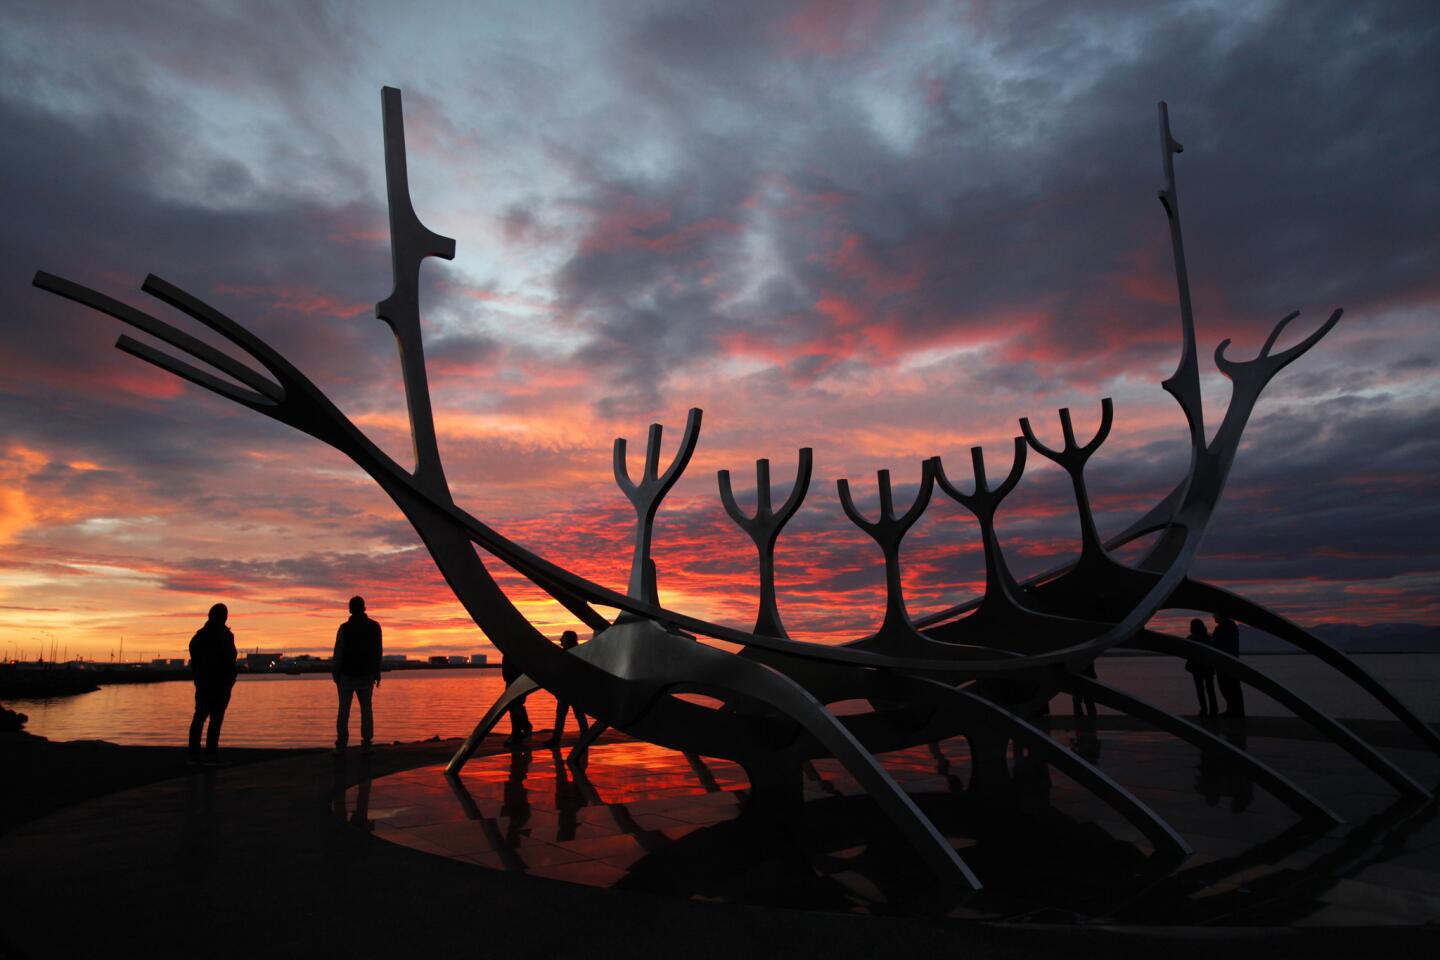 The Viking Ship monument at sunset in Reykjavik.